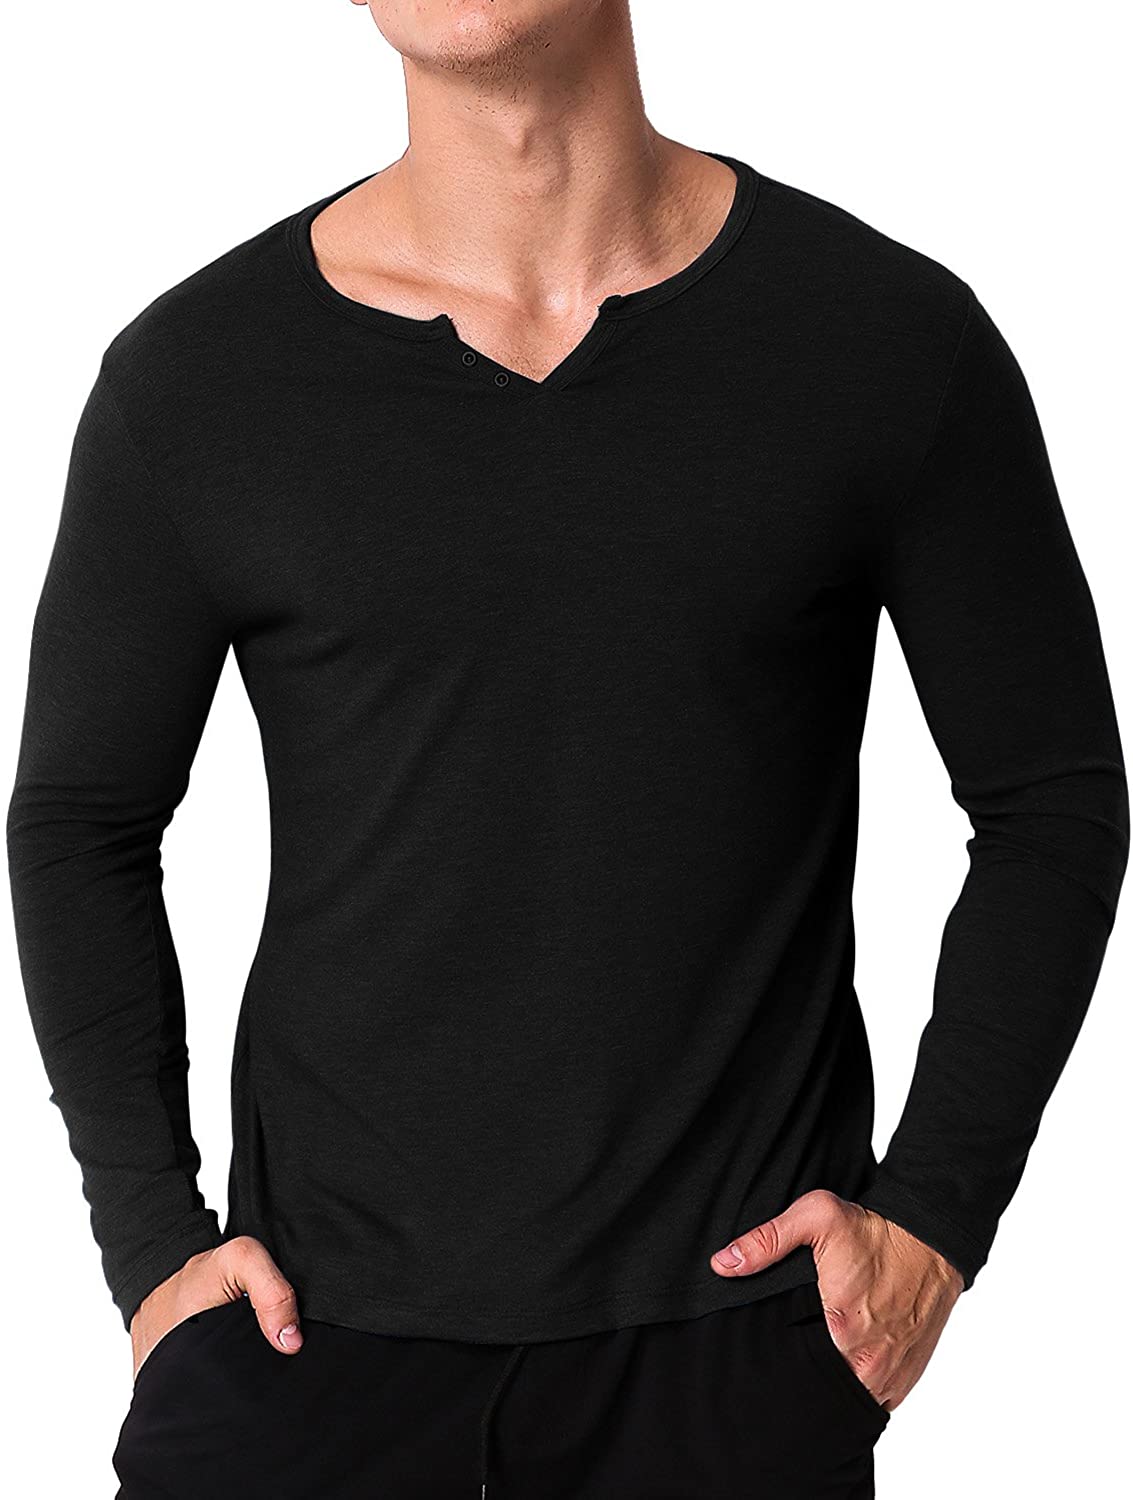 MODCHOK Men's Casual Henley T-Shirts Long Sleeve Slim Fit V Neck Basic ...